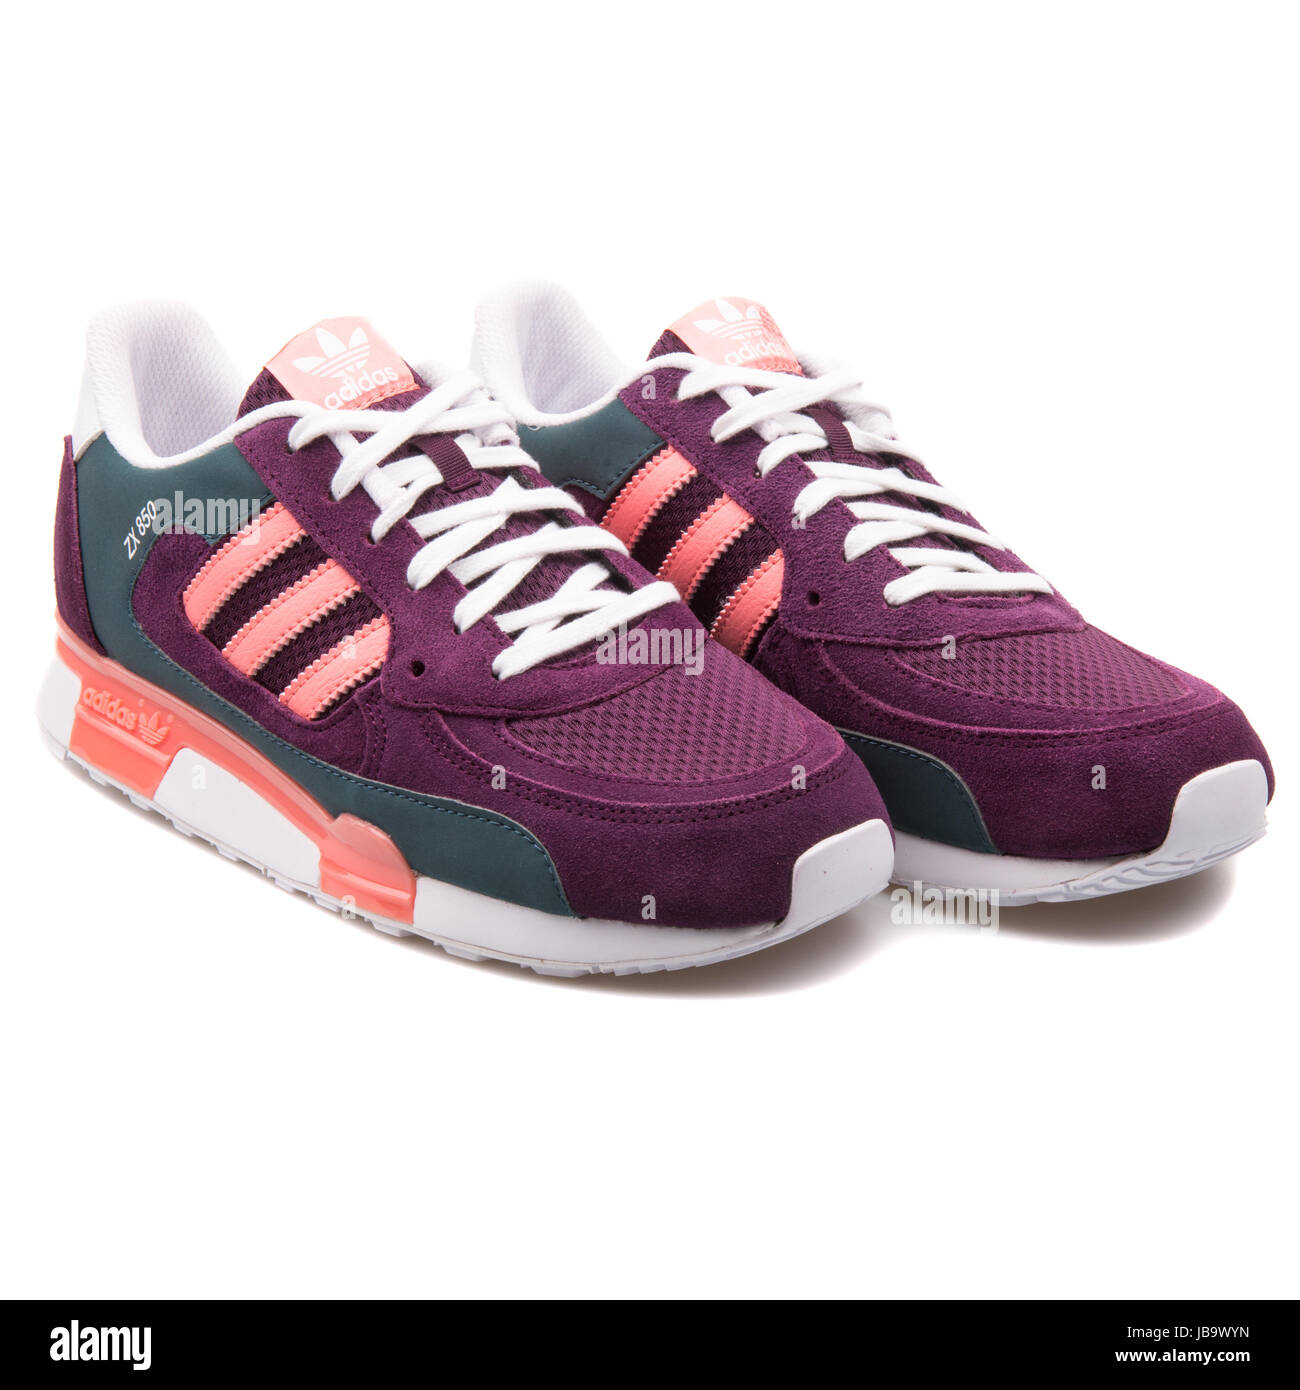 adidas zx 850 pink